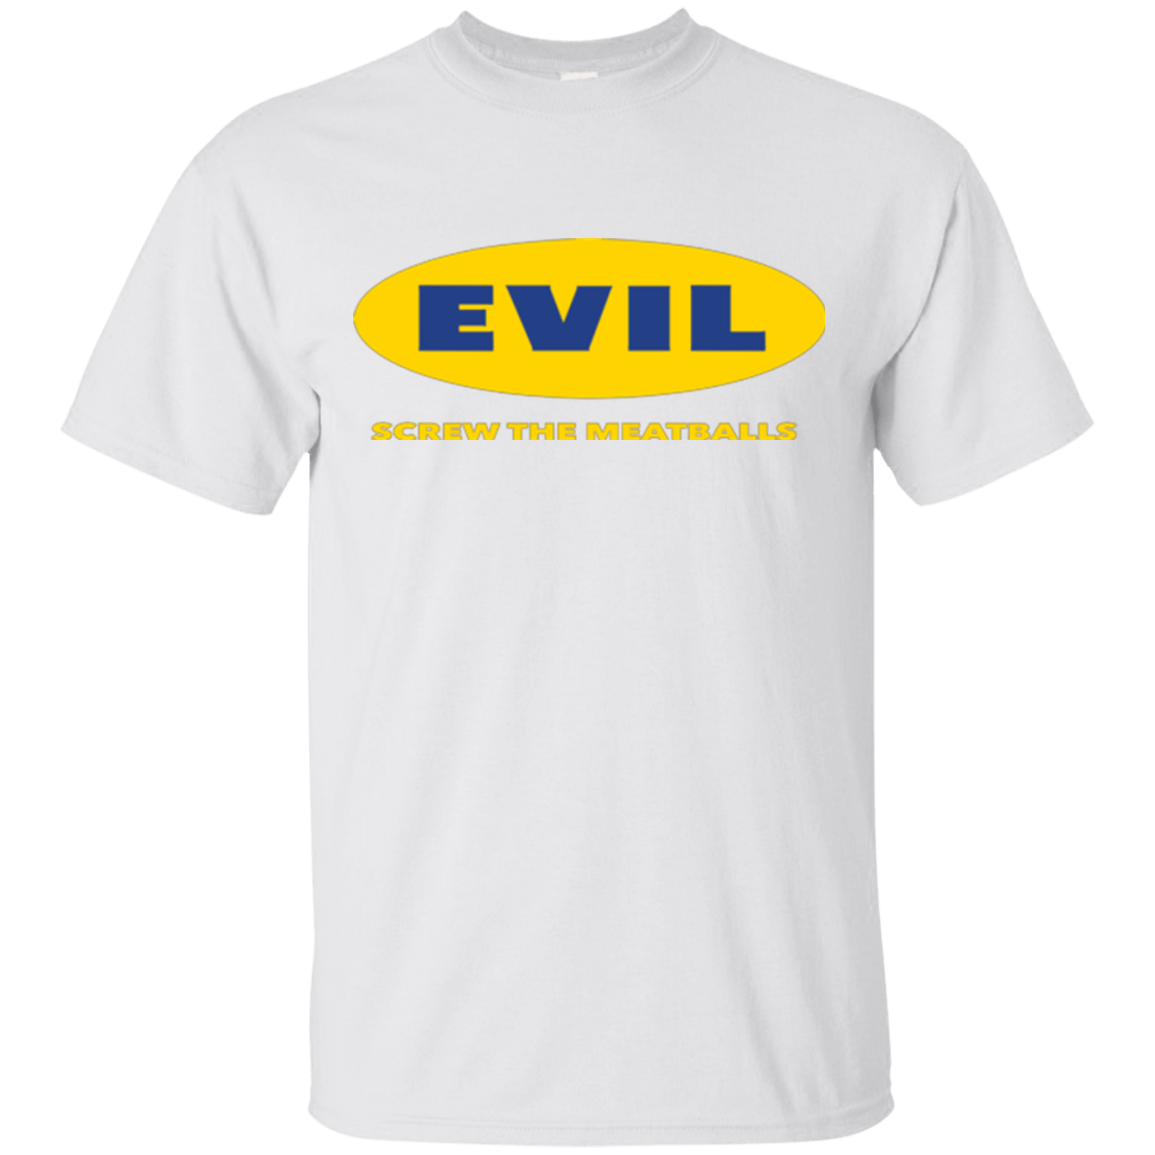 T-Shirts White / Small EVIL Screw The Meatballs T-Shirt